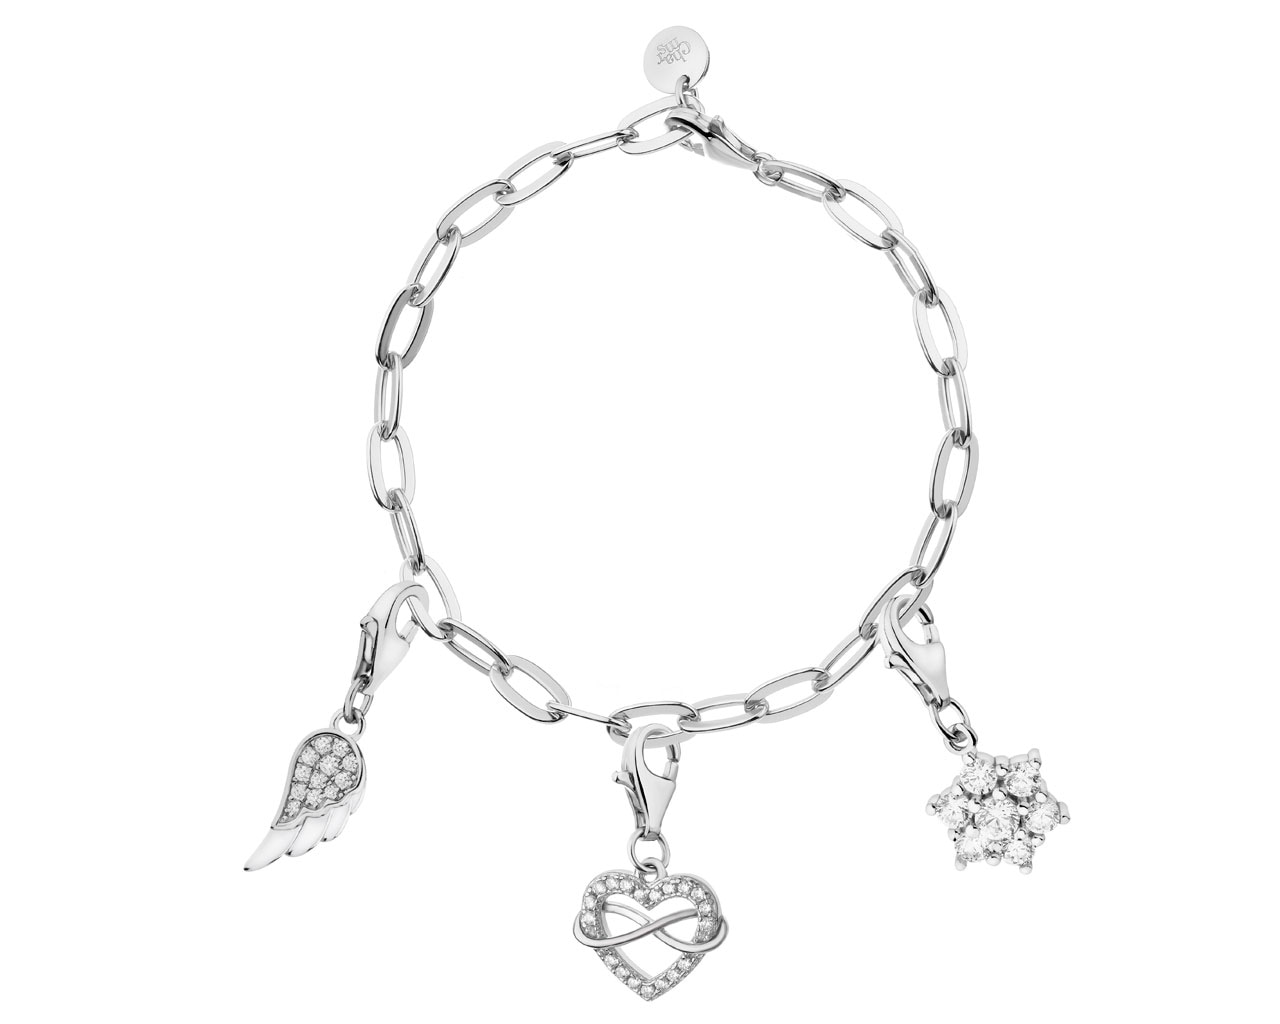 Sterling Silver Charms Bracelet - Set - Wing, Heart, Flower